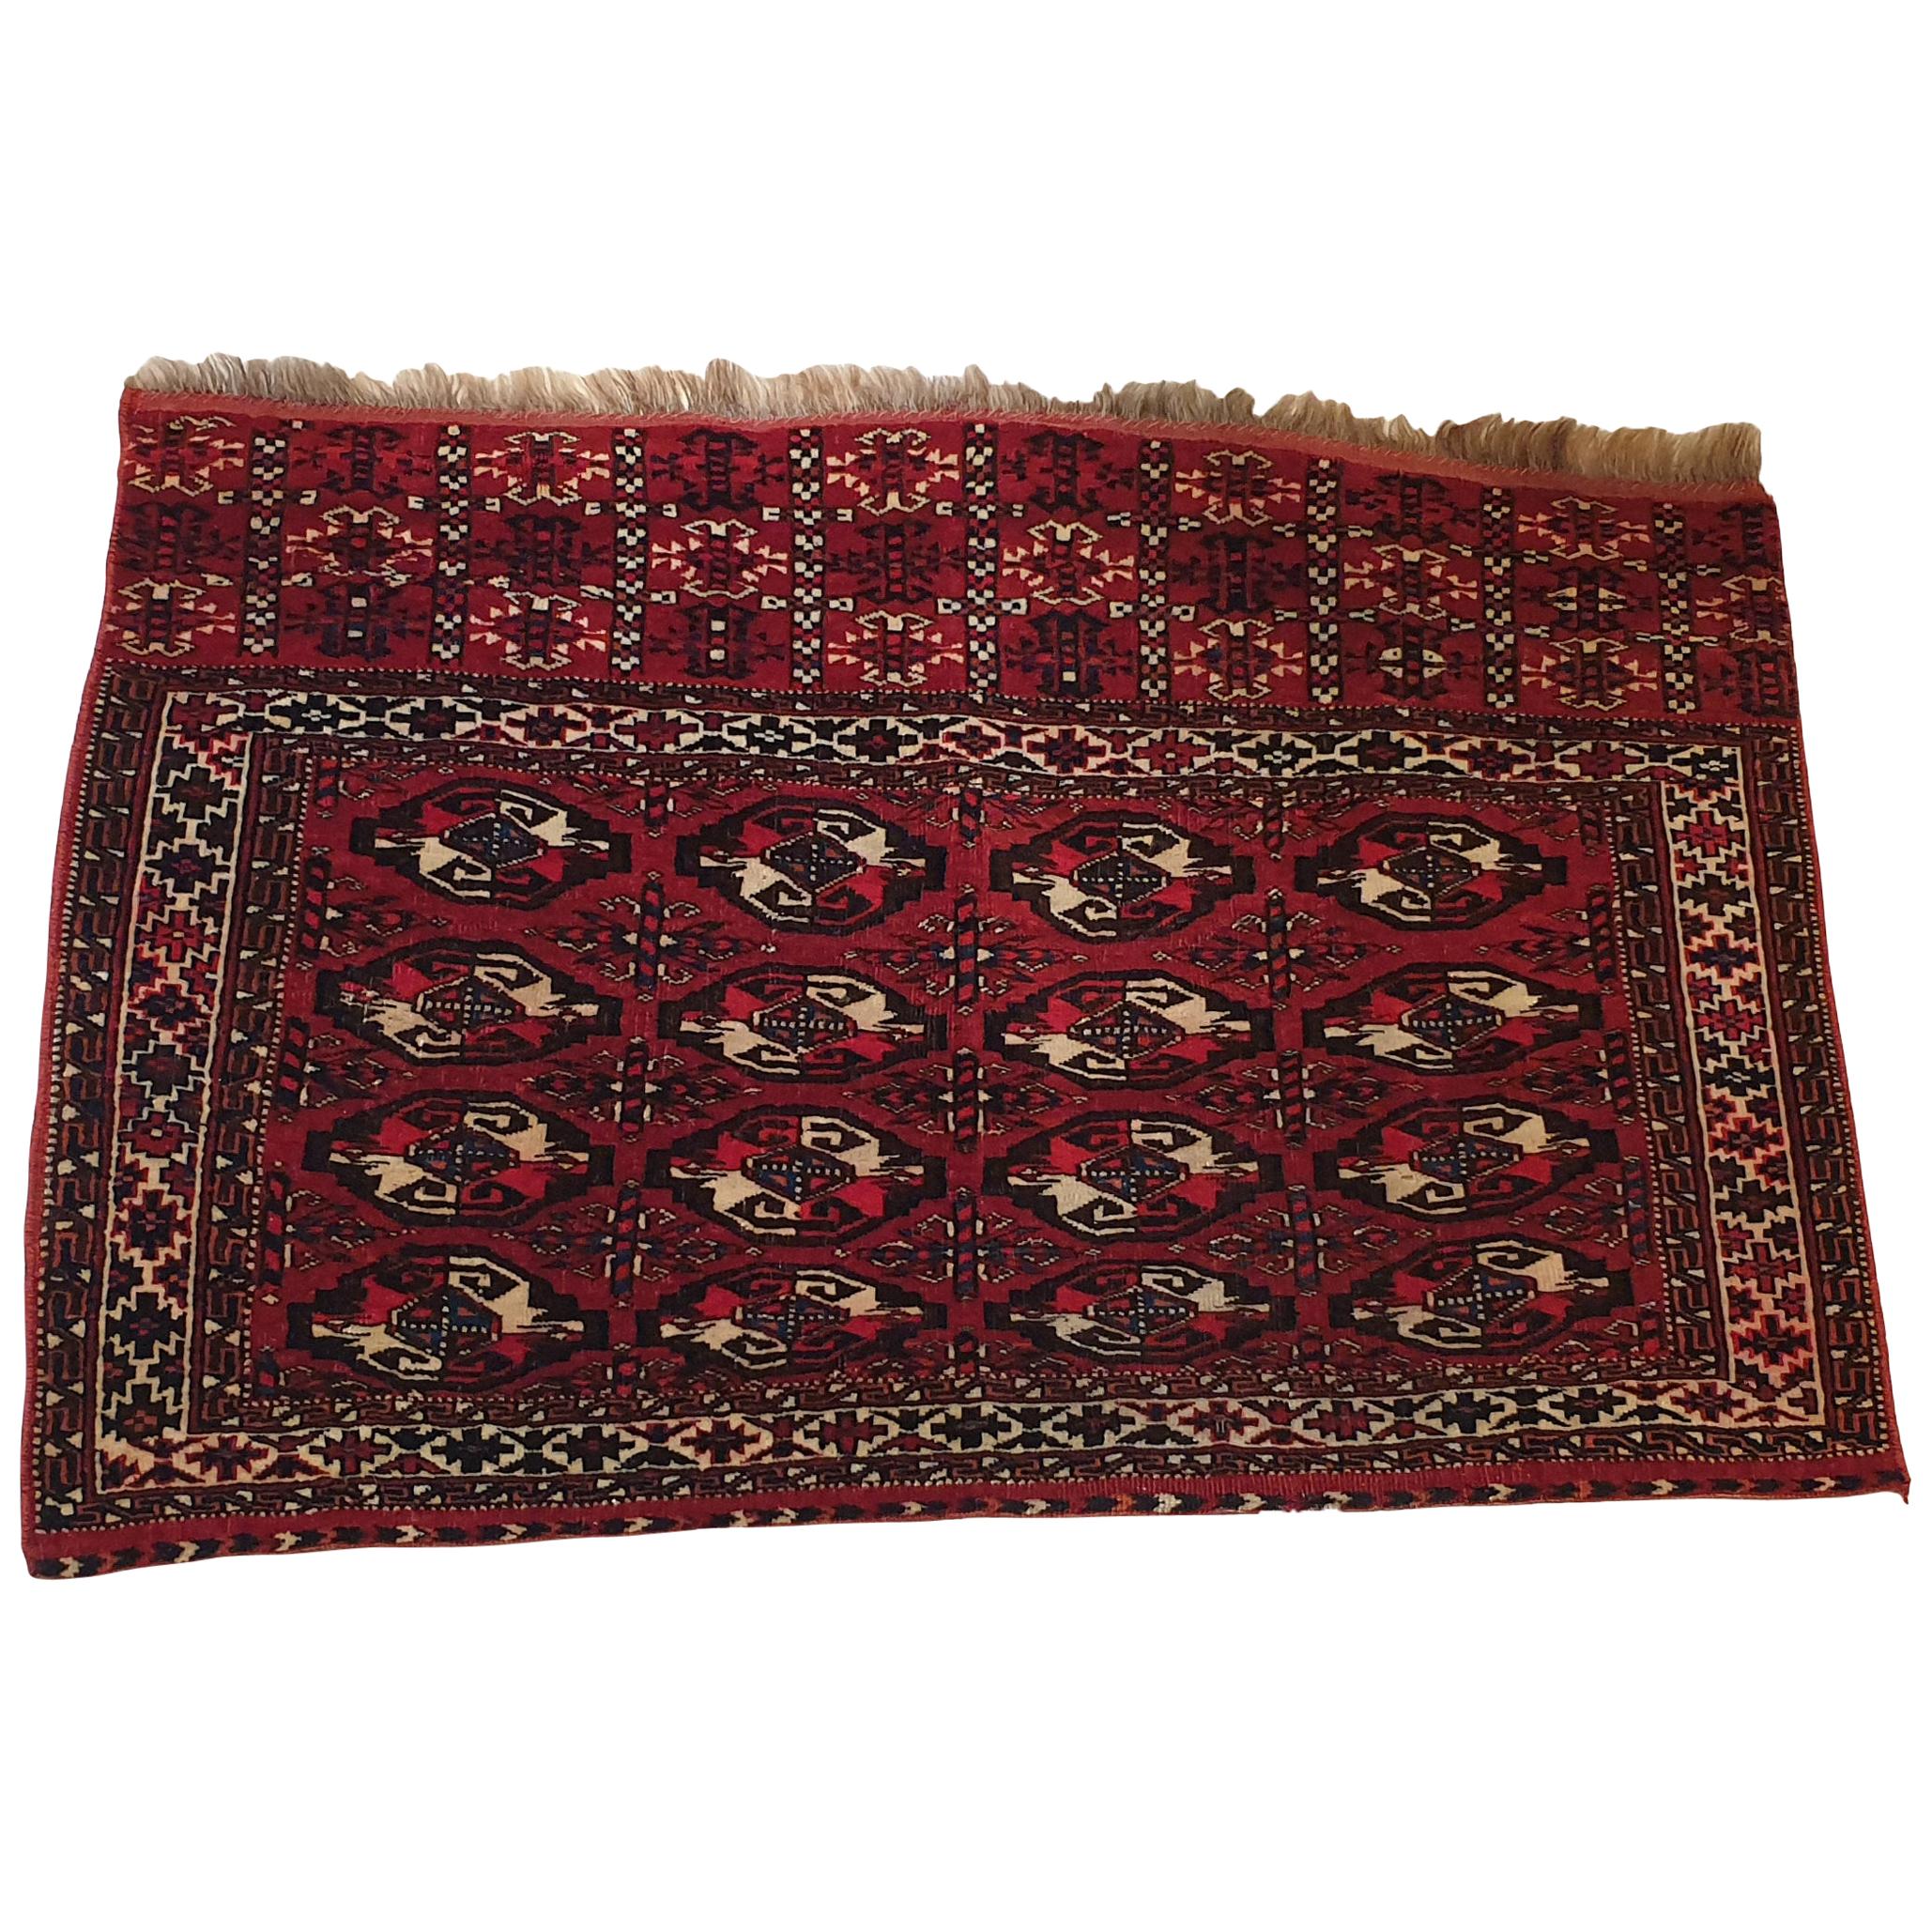 651 - Turkmène Tekke Chuval Carpet, 19th Century